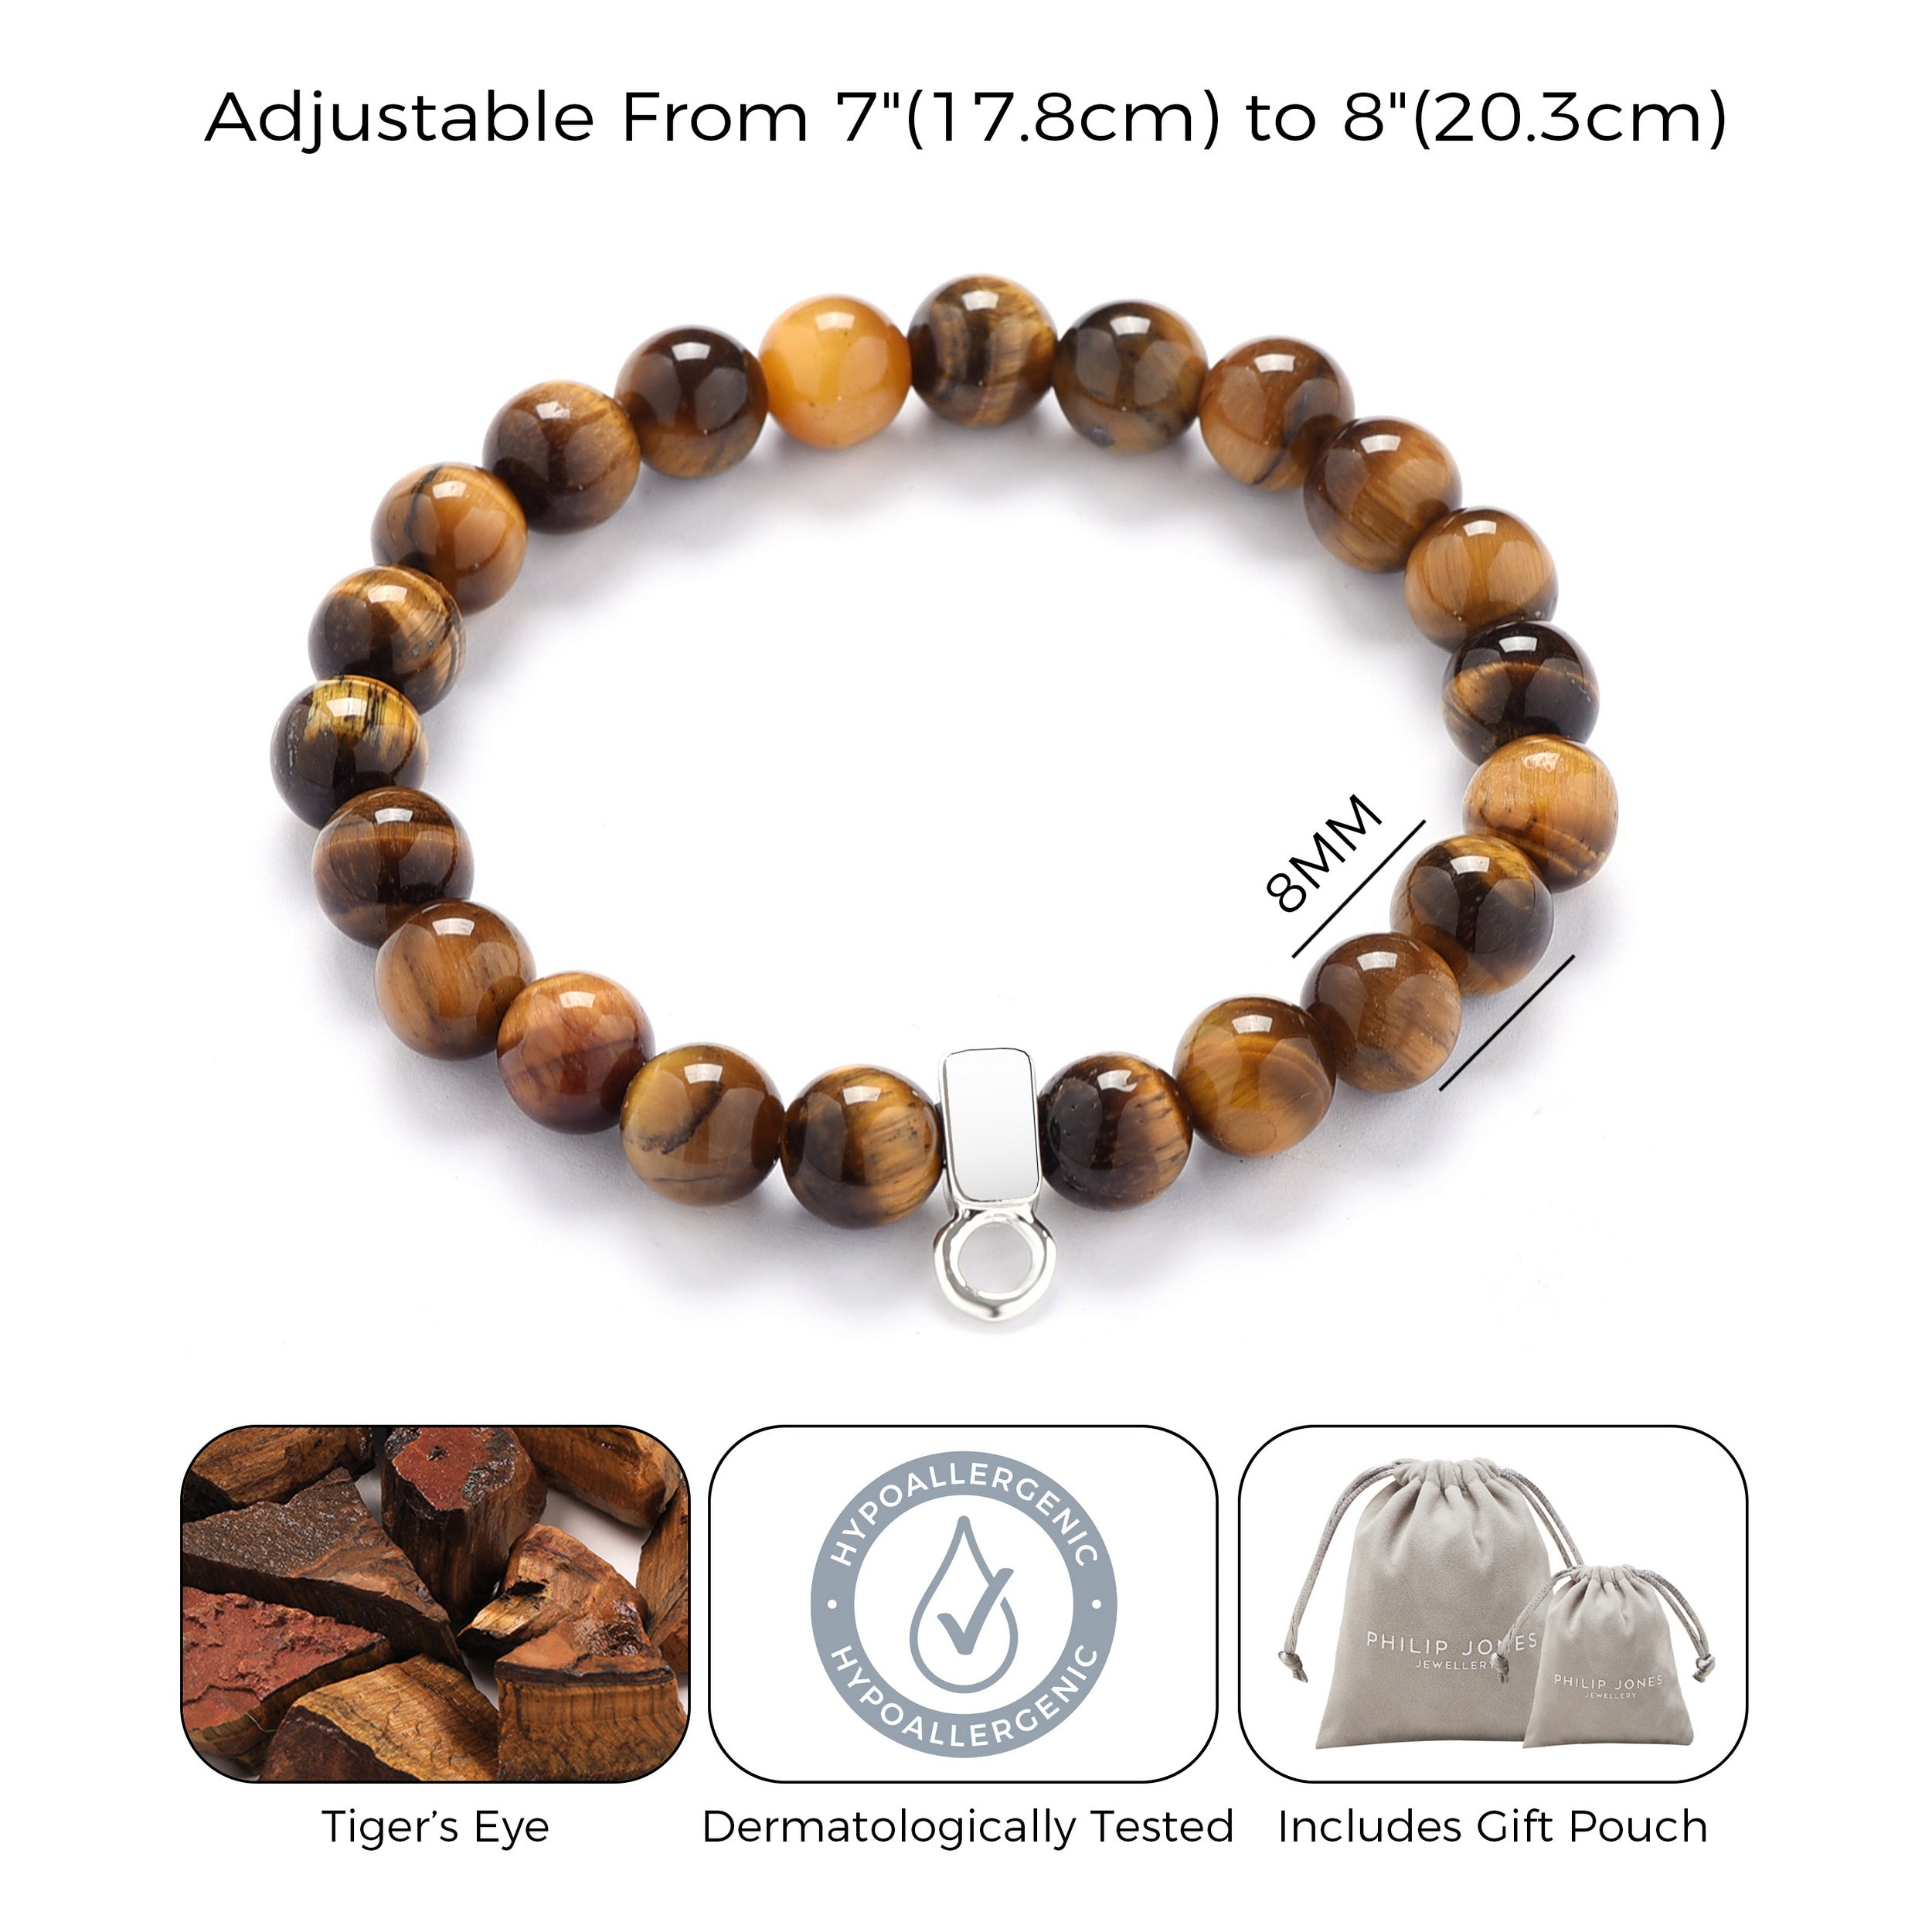 Tiger's Eye Gemstone Charm Stretch Bracelet with Charm Created with Zircondia® Crystals